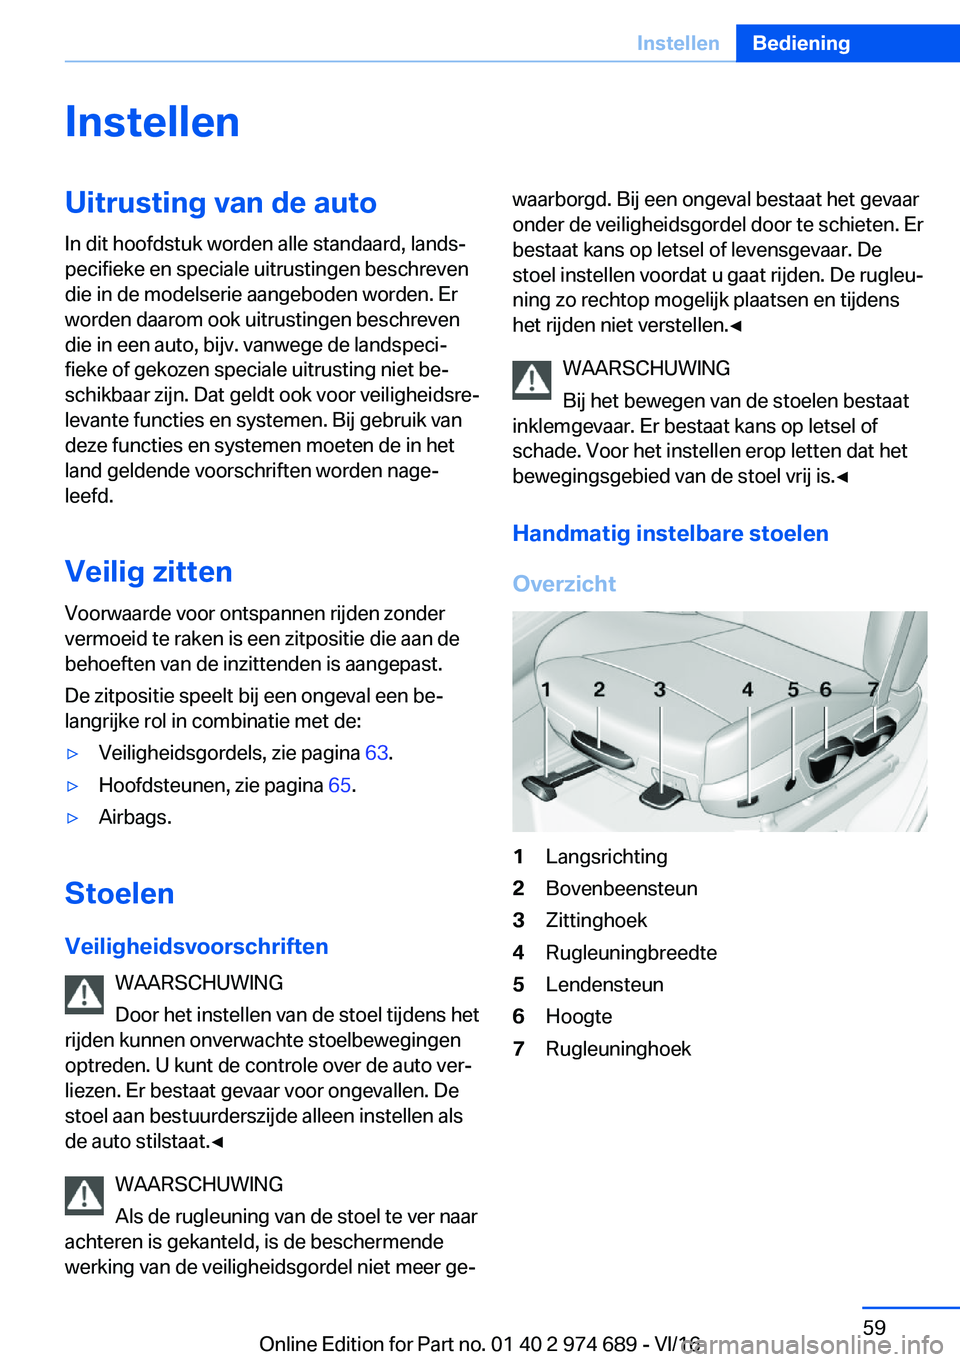 BMW M2 2017  Instructieboekjes (in Dutch) �I�n�s�t�e�l�l�e�n�U�i�t�r�u�s�t�i�n�g��v�a�n��d�e��a�u�t�o
�I�n� �d�i�t� �h�o�o�f�d�s�t�u�k� �w�o�r�d�e�n� �a�l�l�e� �s�t�a�n�d�a�a�r�d�,� �l�a�n�d�sj
�p�e�c�i�f�i�e�k�e� �e�n� �s�p�e�c�i�a�l�e� 